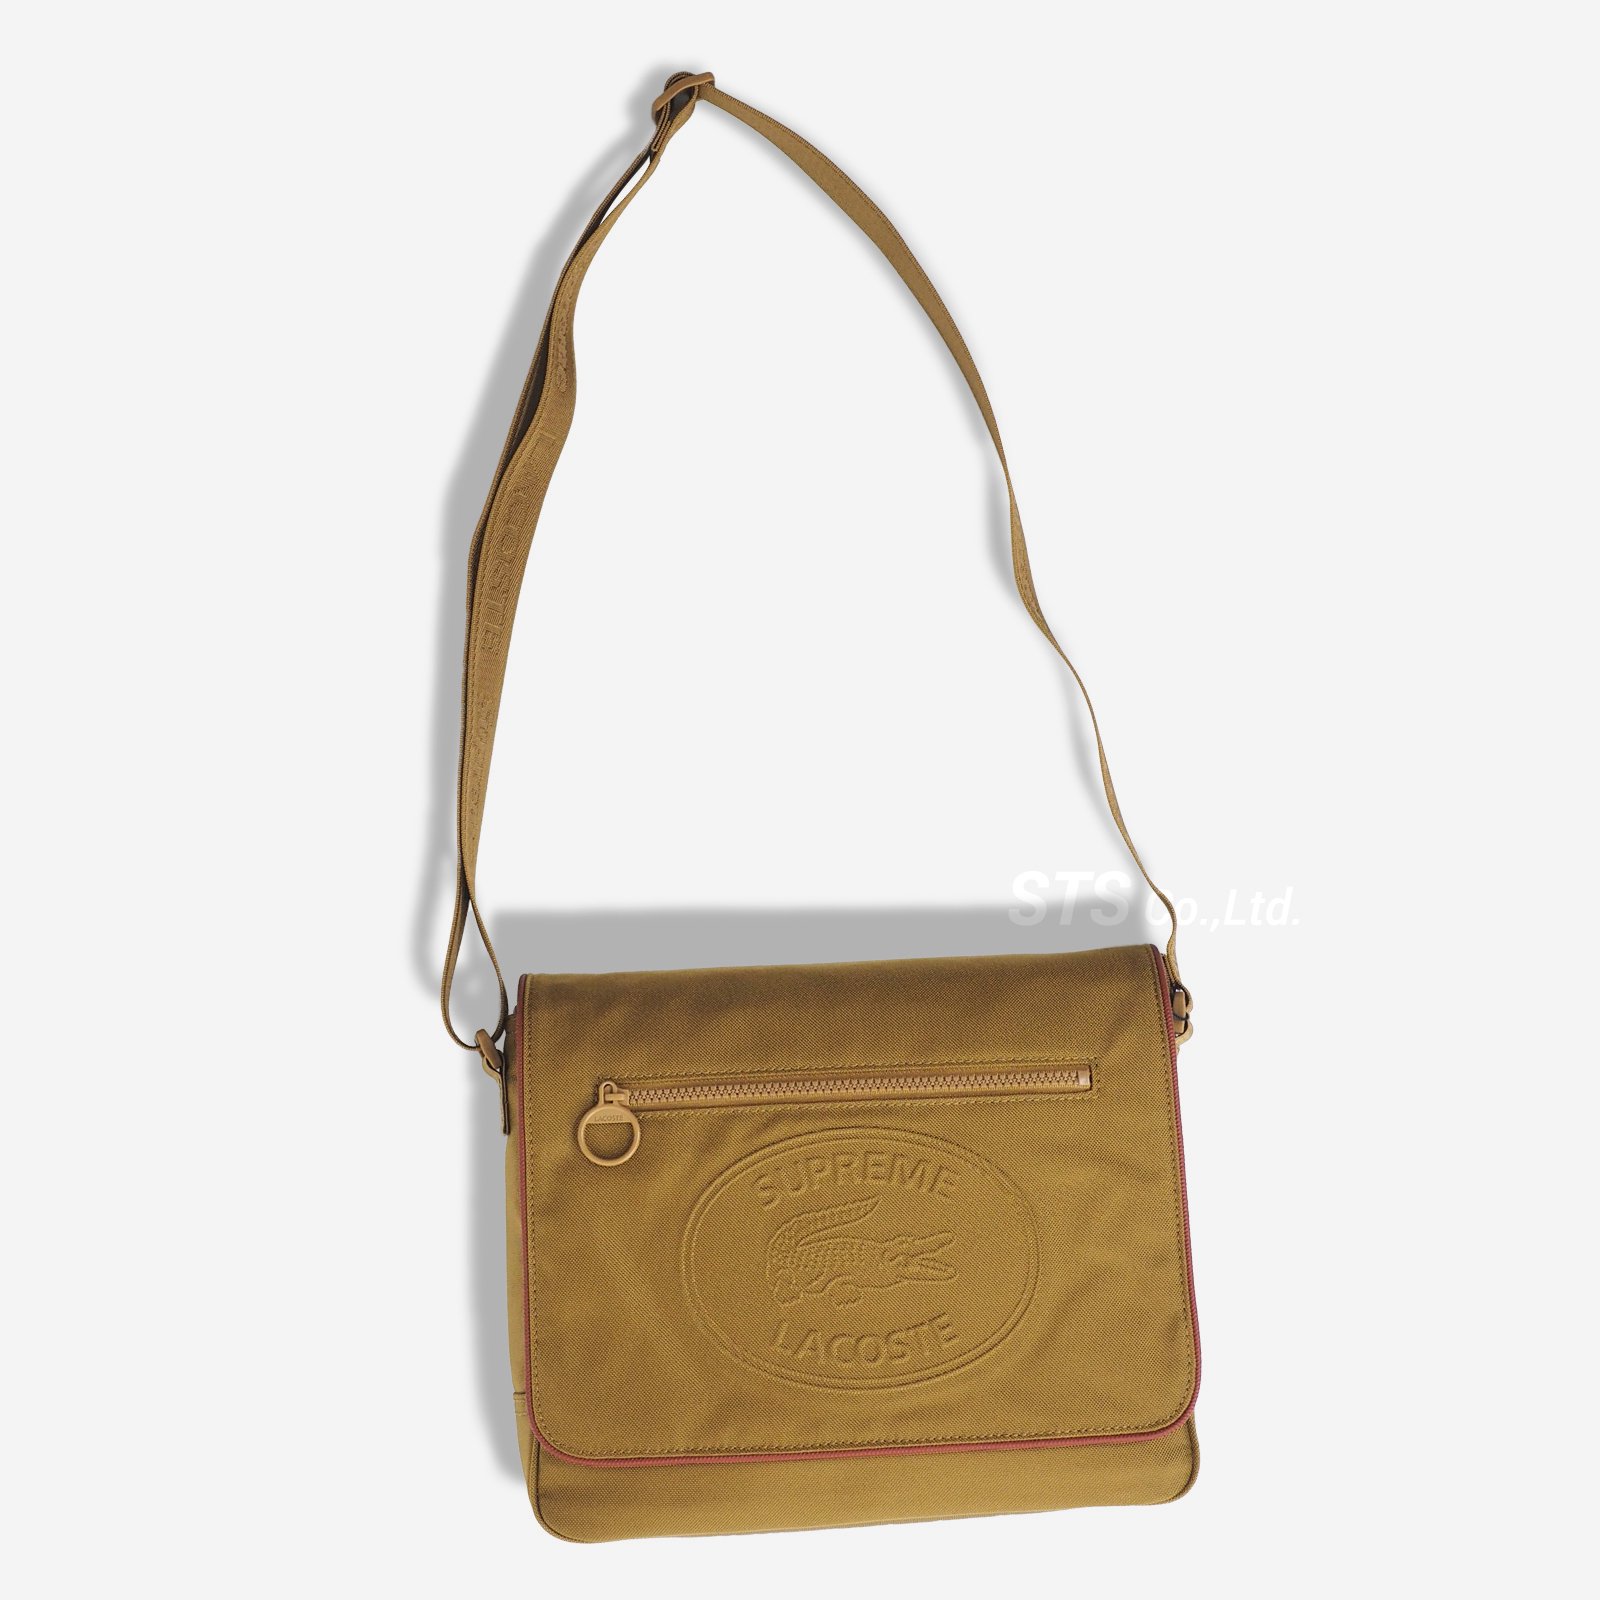 supreme lacoste small messenger bag gold